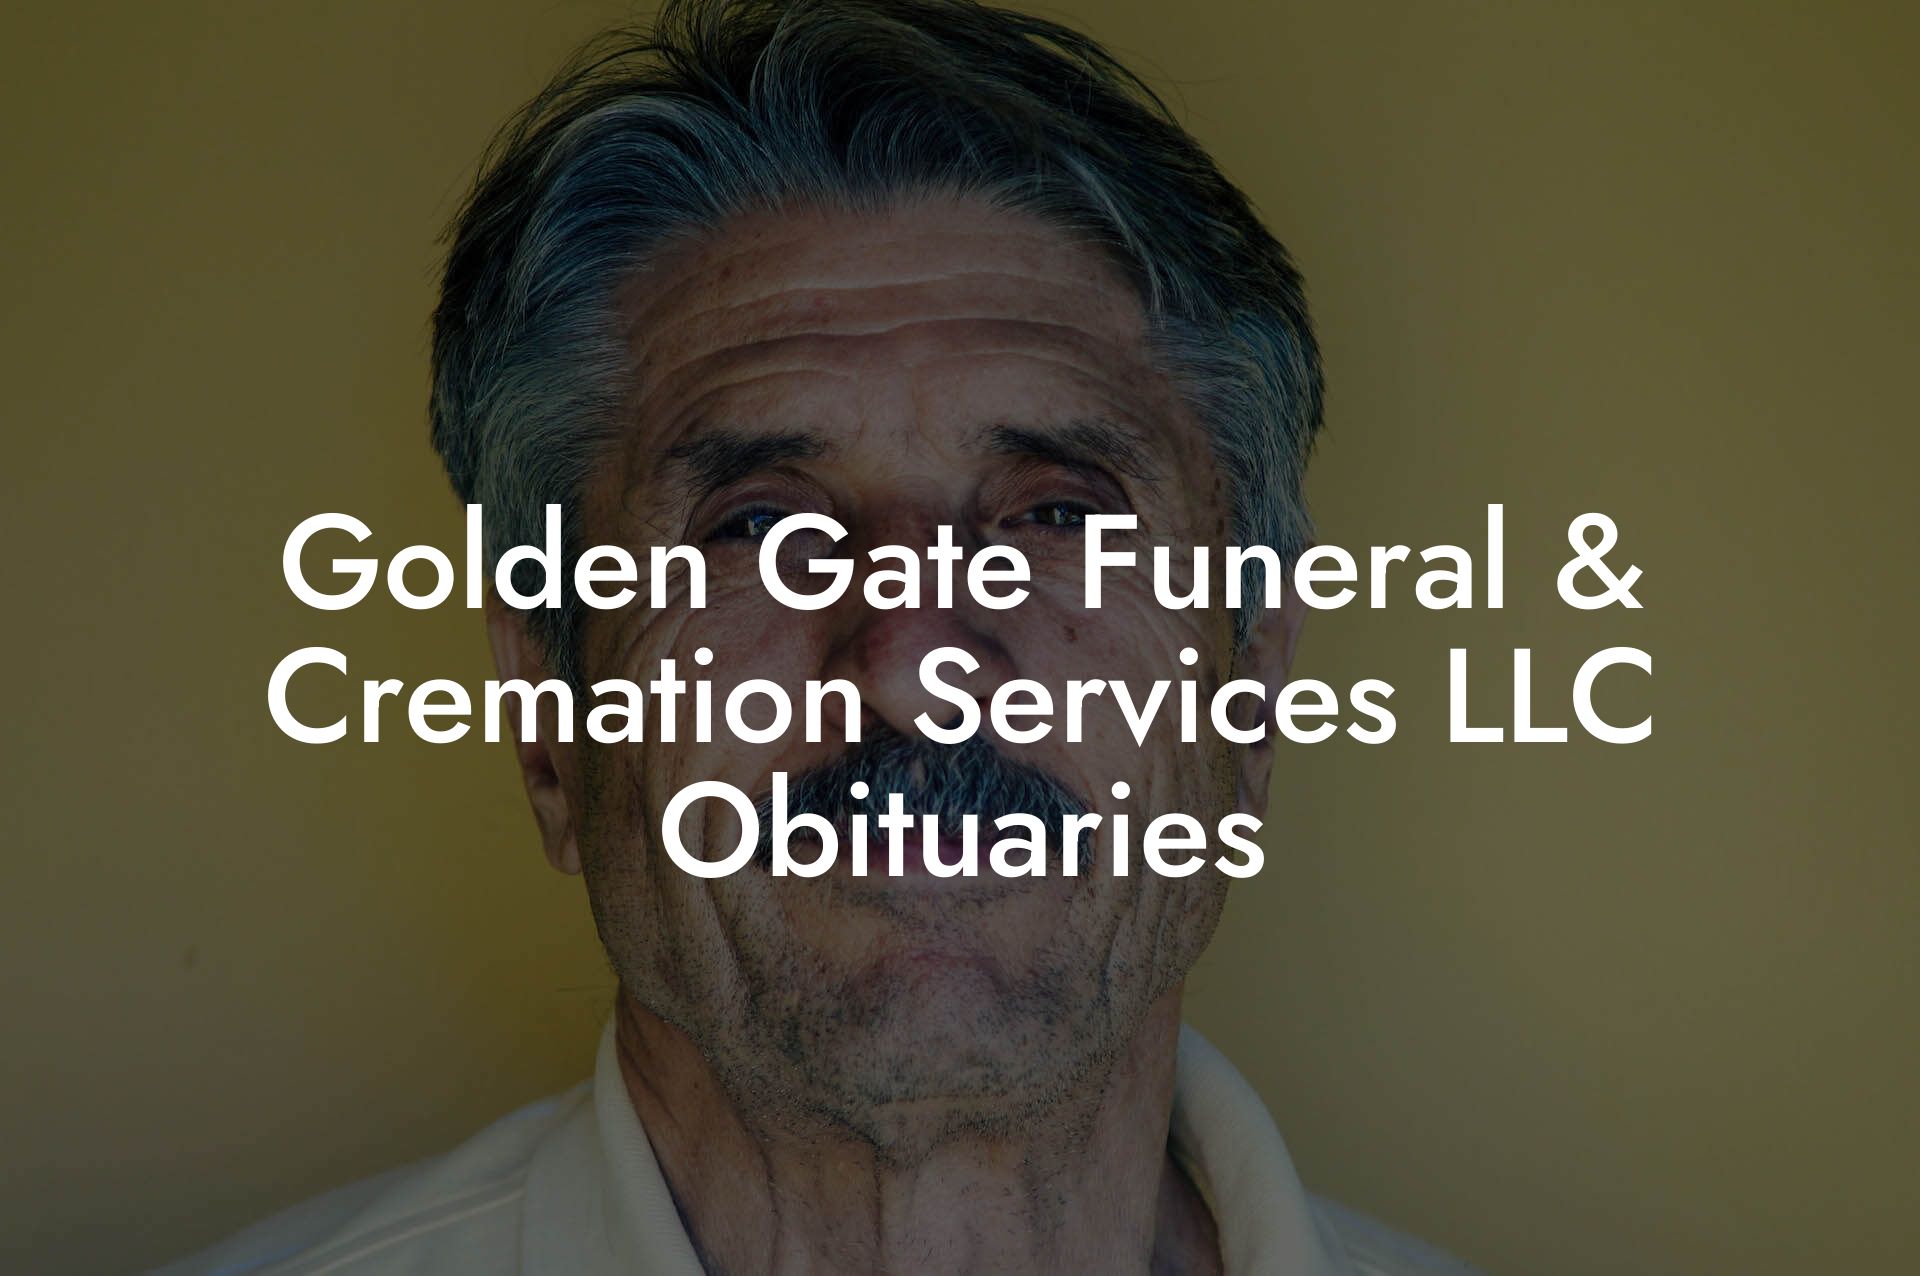 Golden Gate Funeral & Cremation Services LLC Obituaries